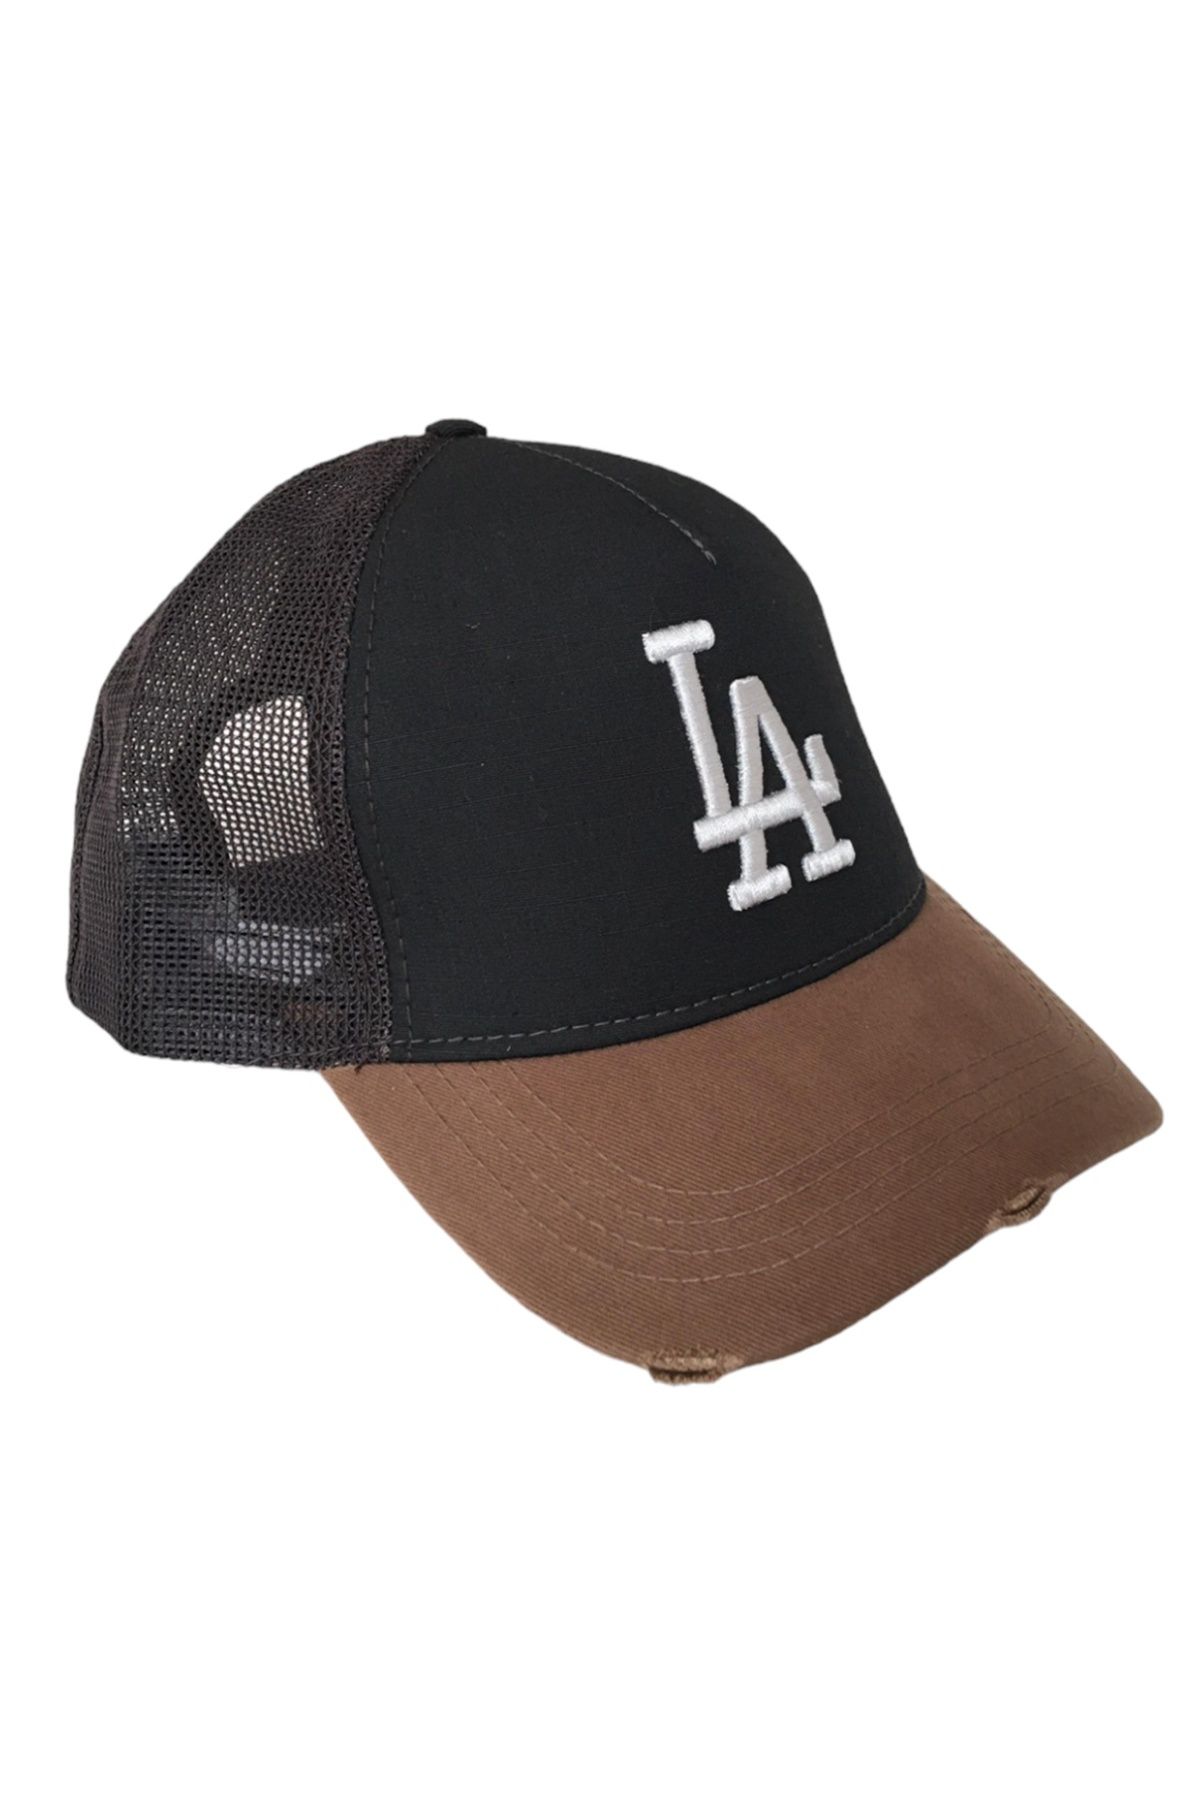 Outlet Çarşım LA Nakışlı Siyah Fileli Şapka Unisex Model Günlük Kep Cap Basketbol Baseball